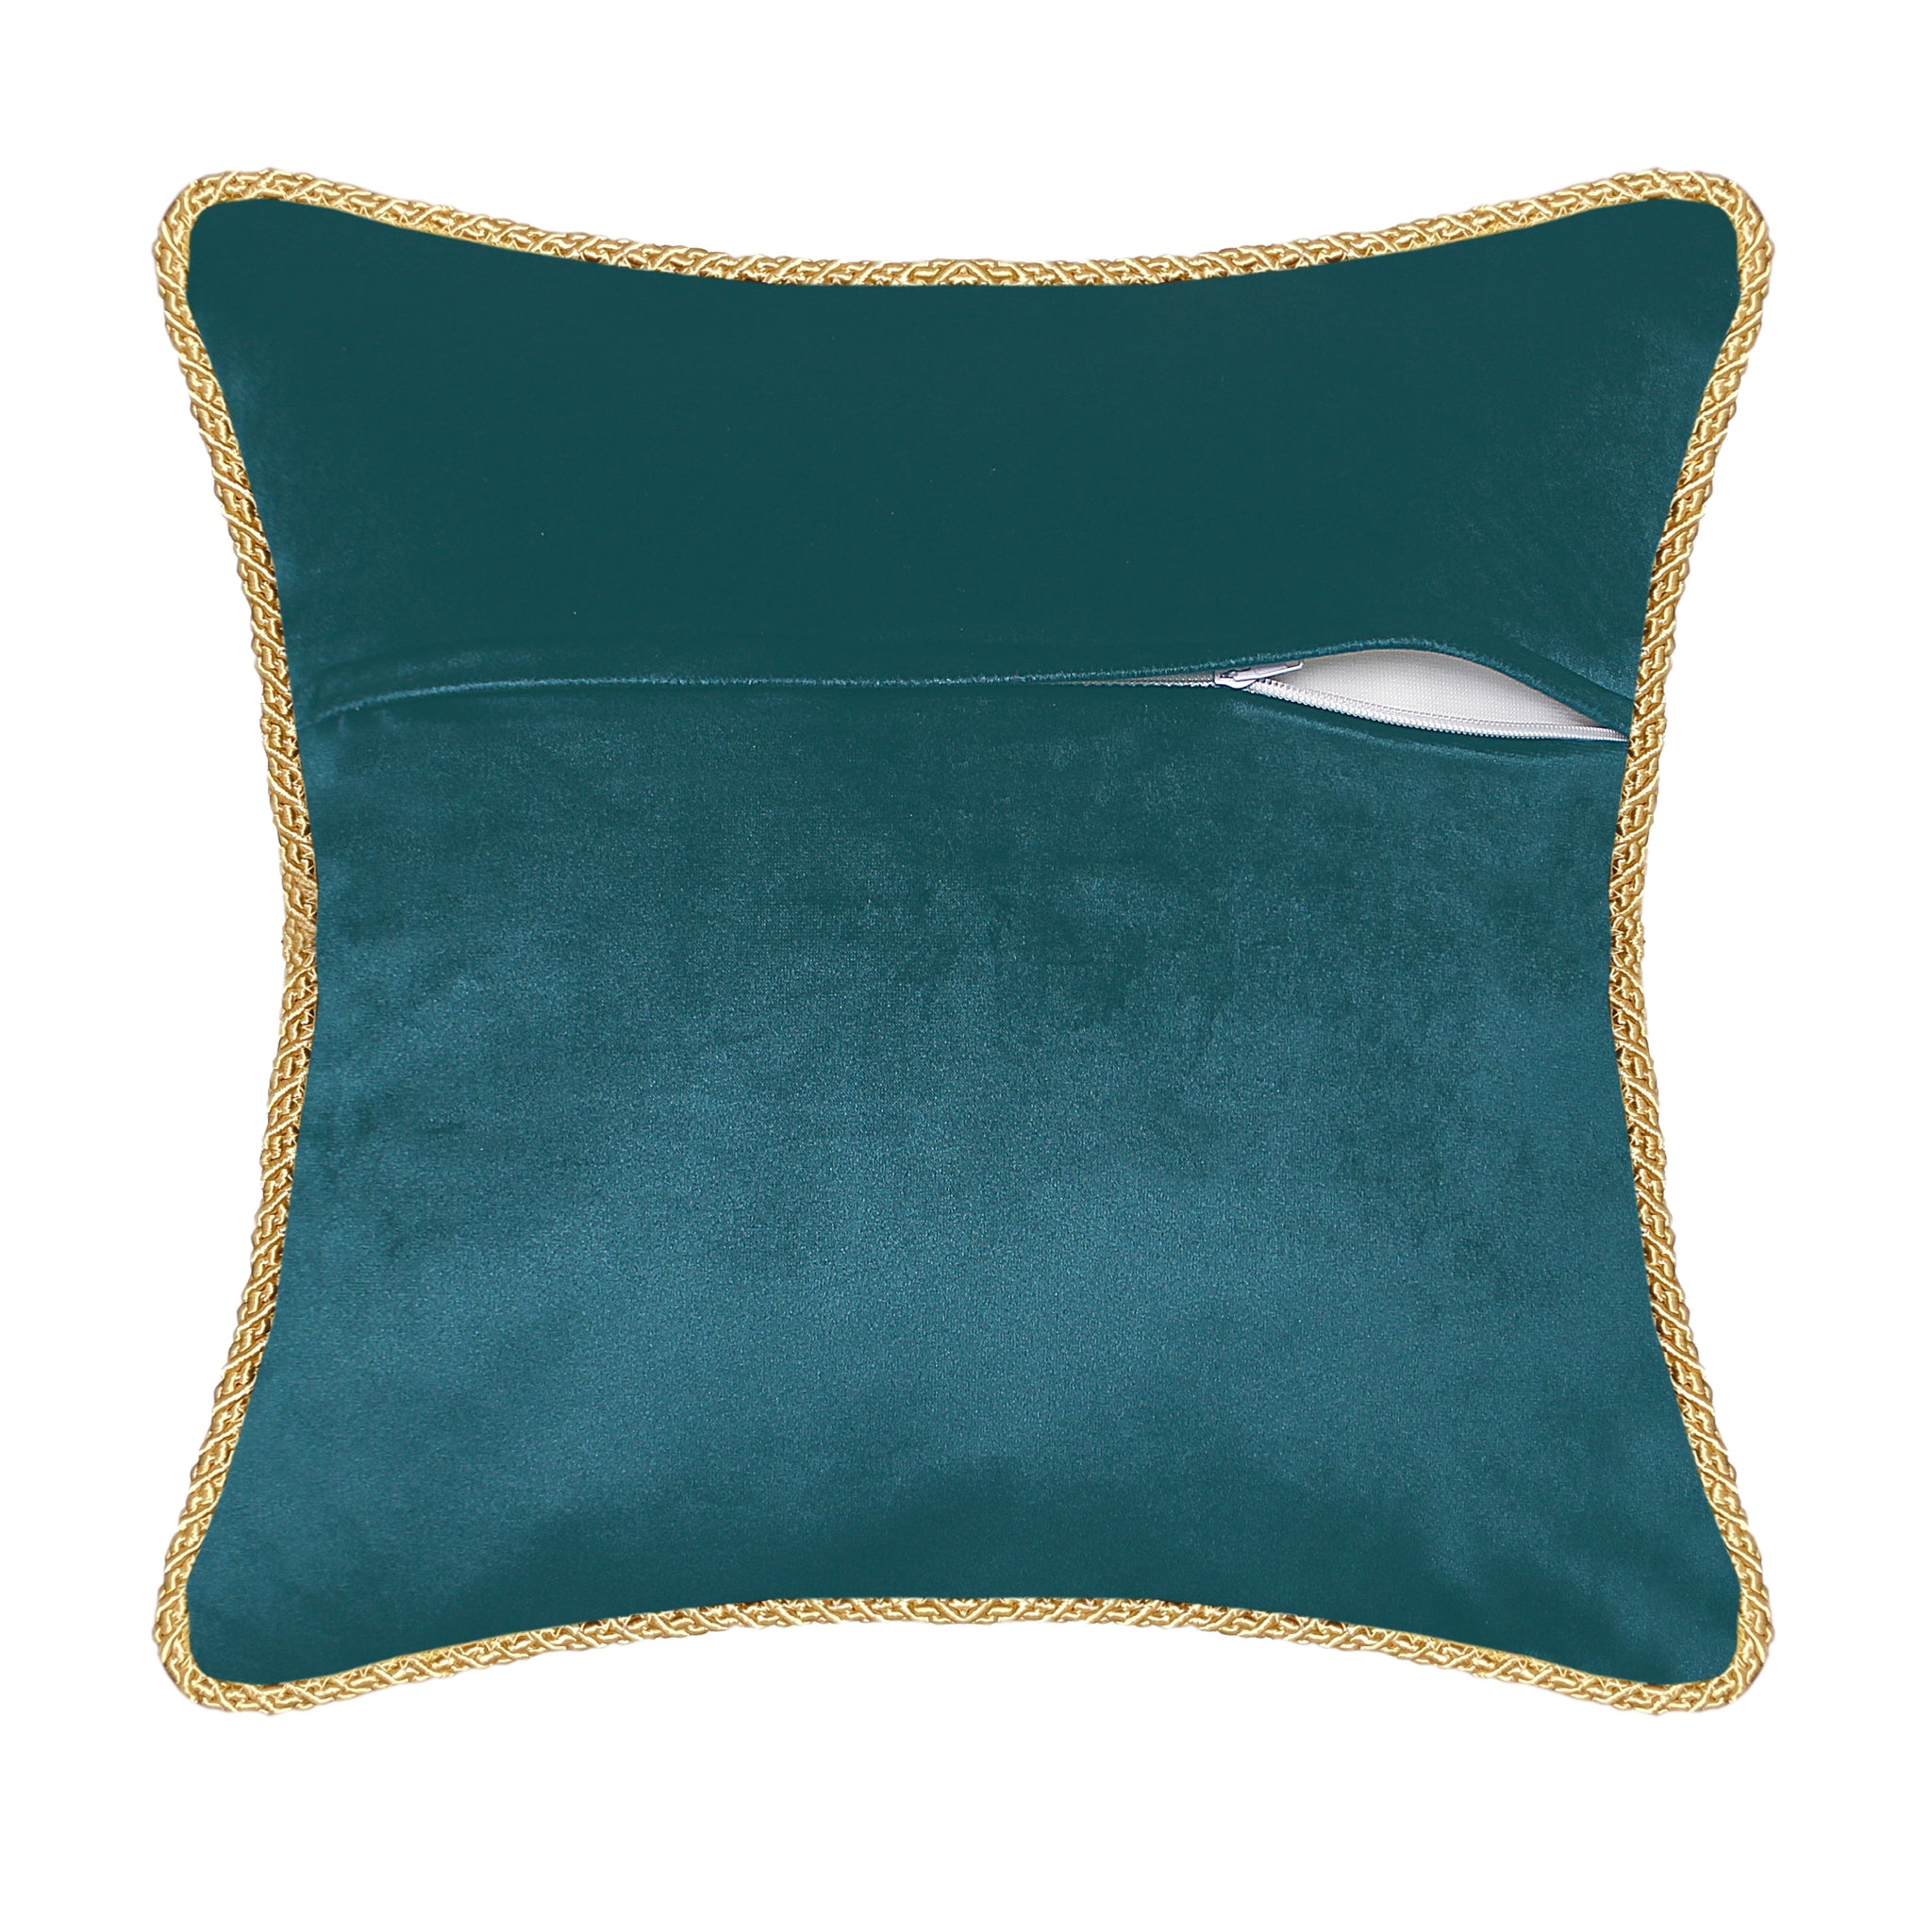  Velvet Cushion Cover Tiger Embroidery Decorative Pillowcase Modern Home Decor Throw Pillow for Sofa Chair Living Room 45x45 cm 